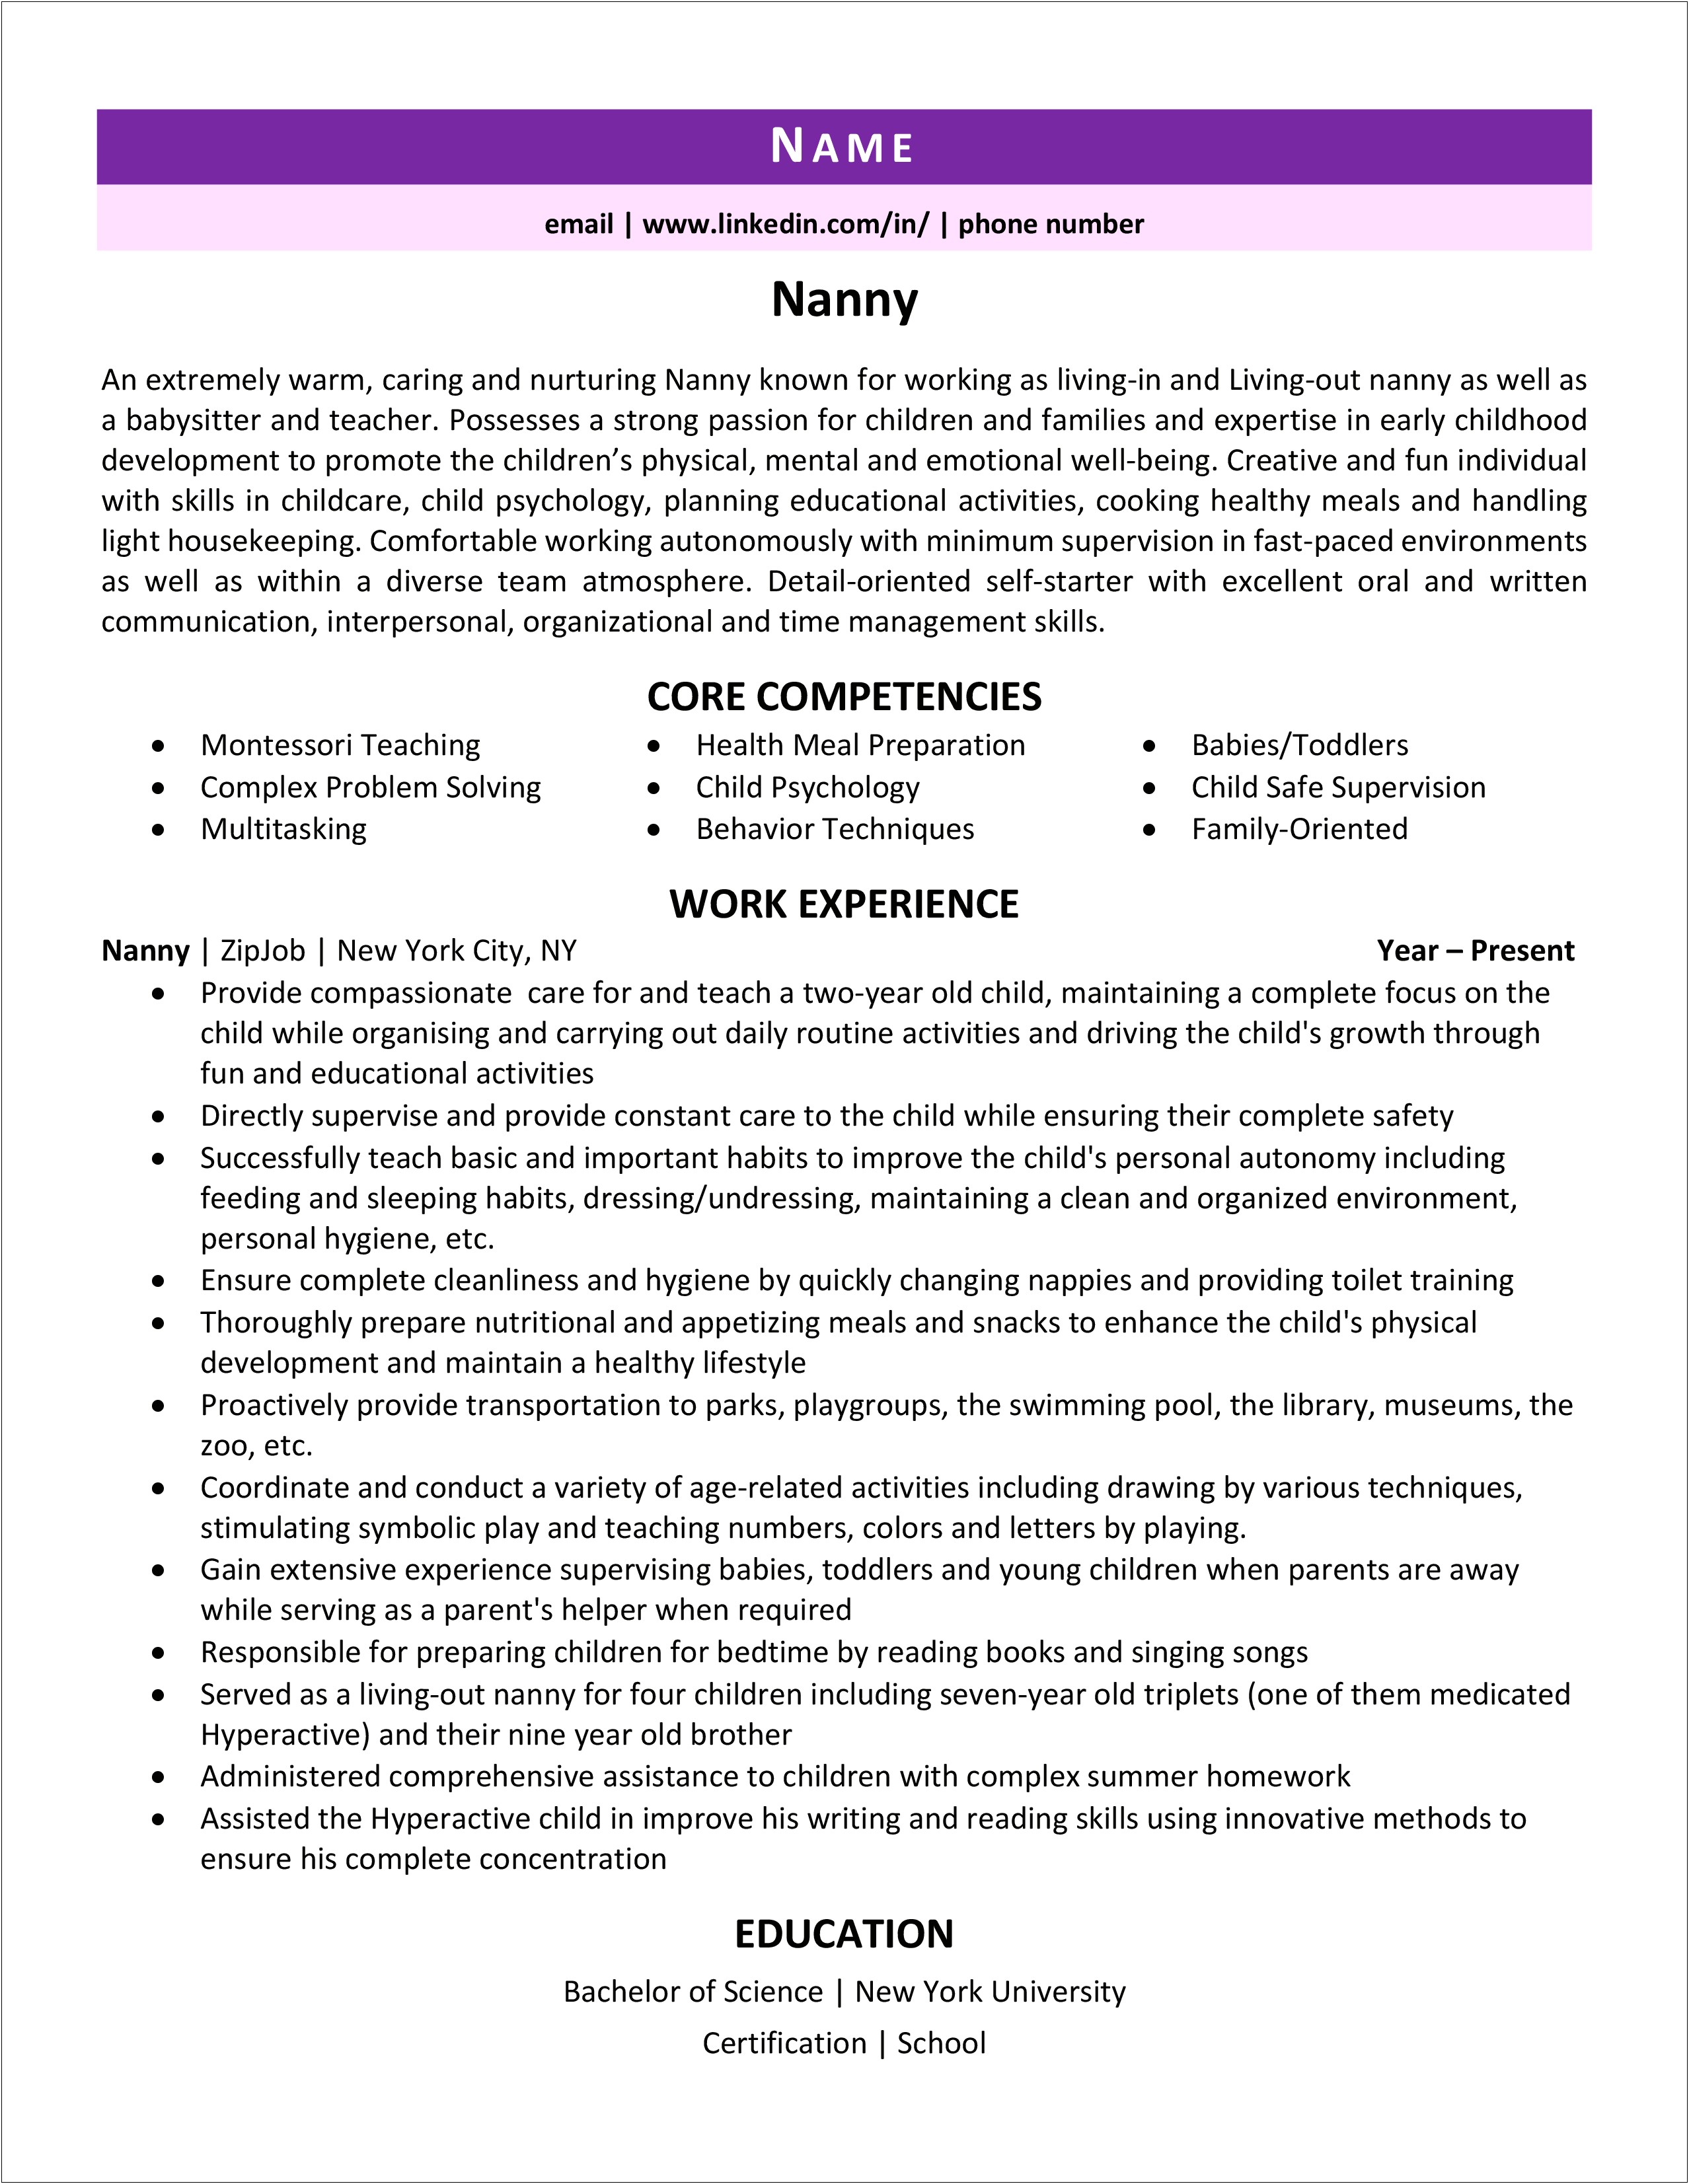 Resume That Has A Nanny As A Job